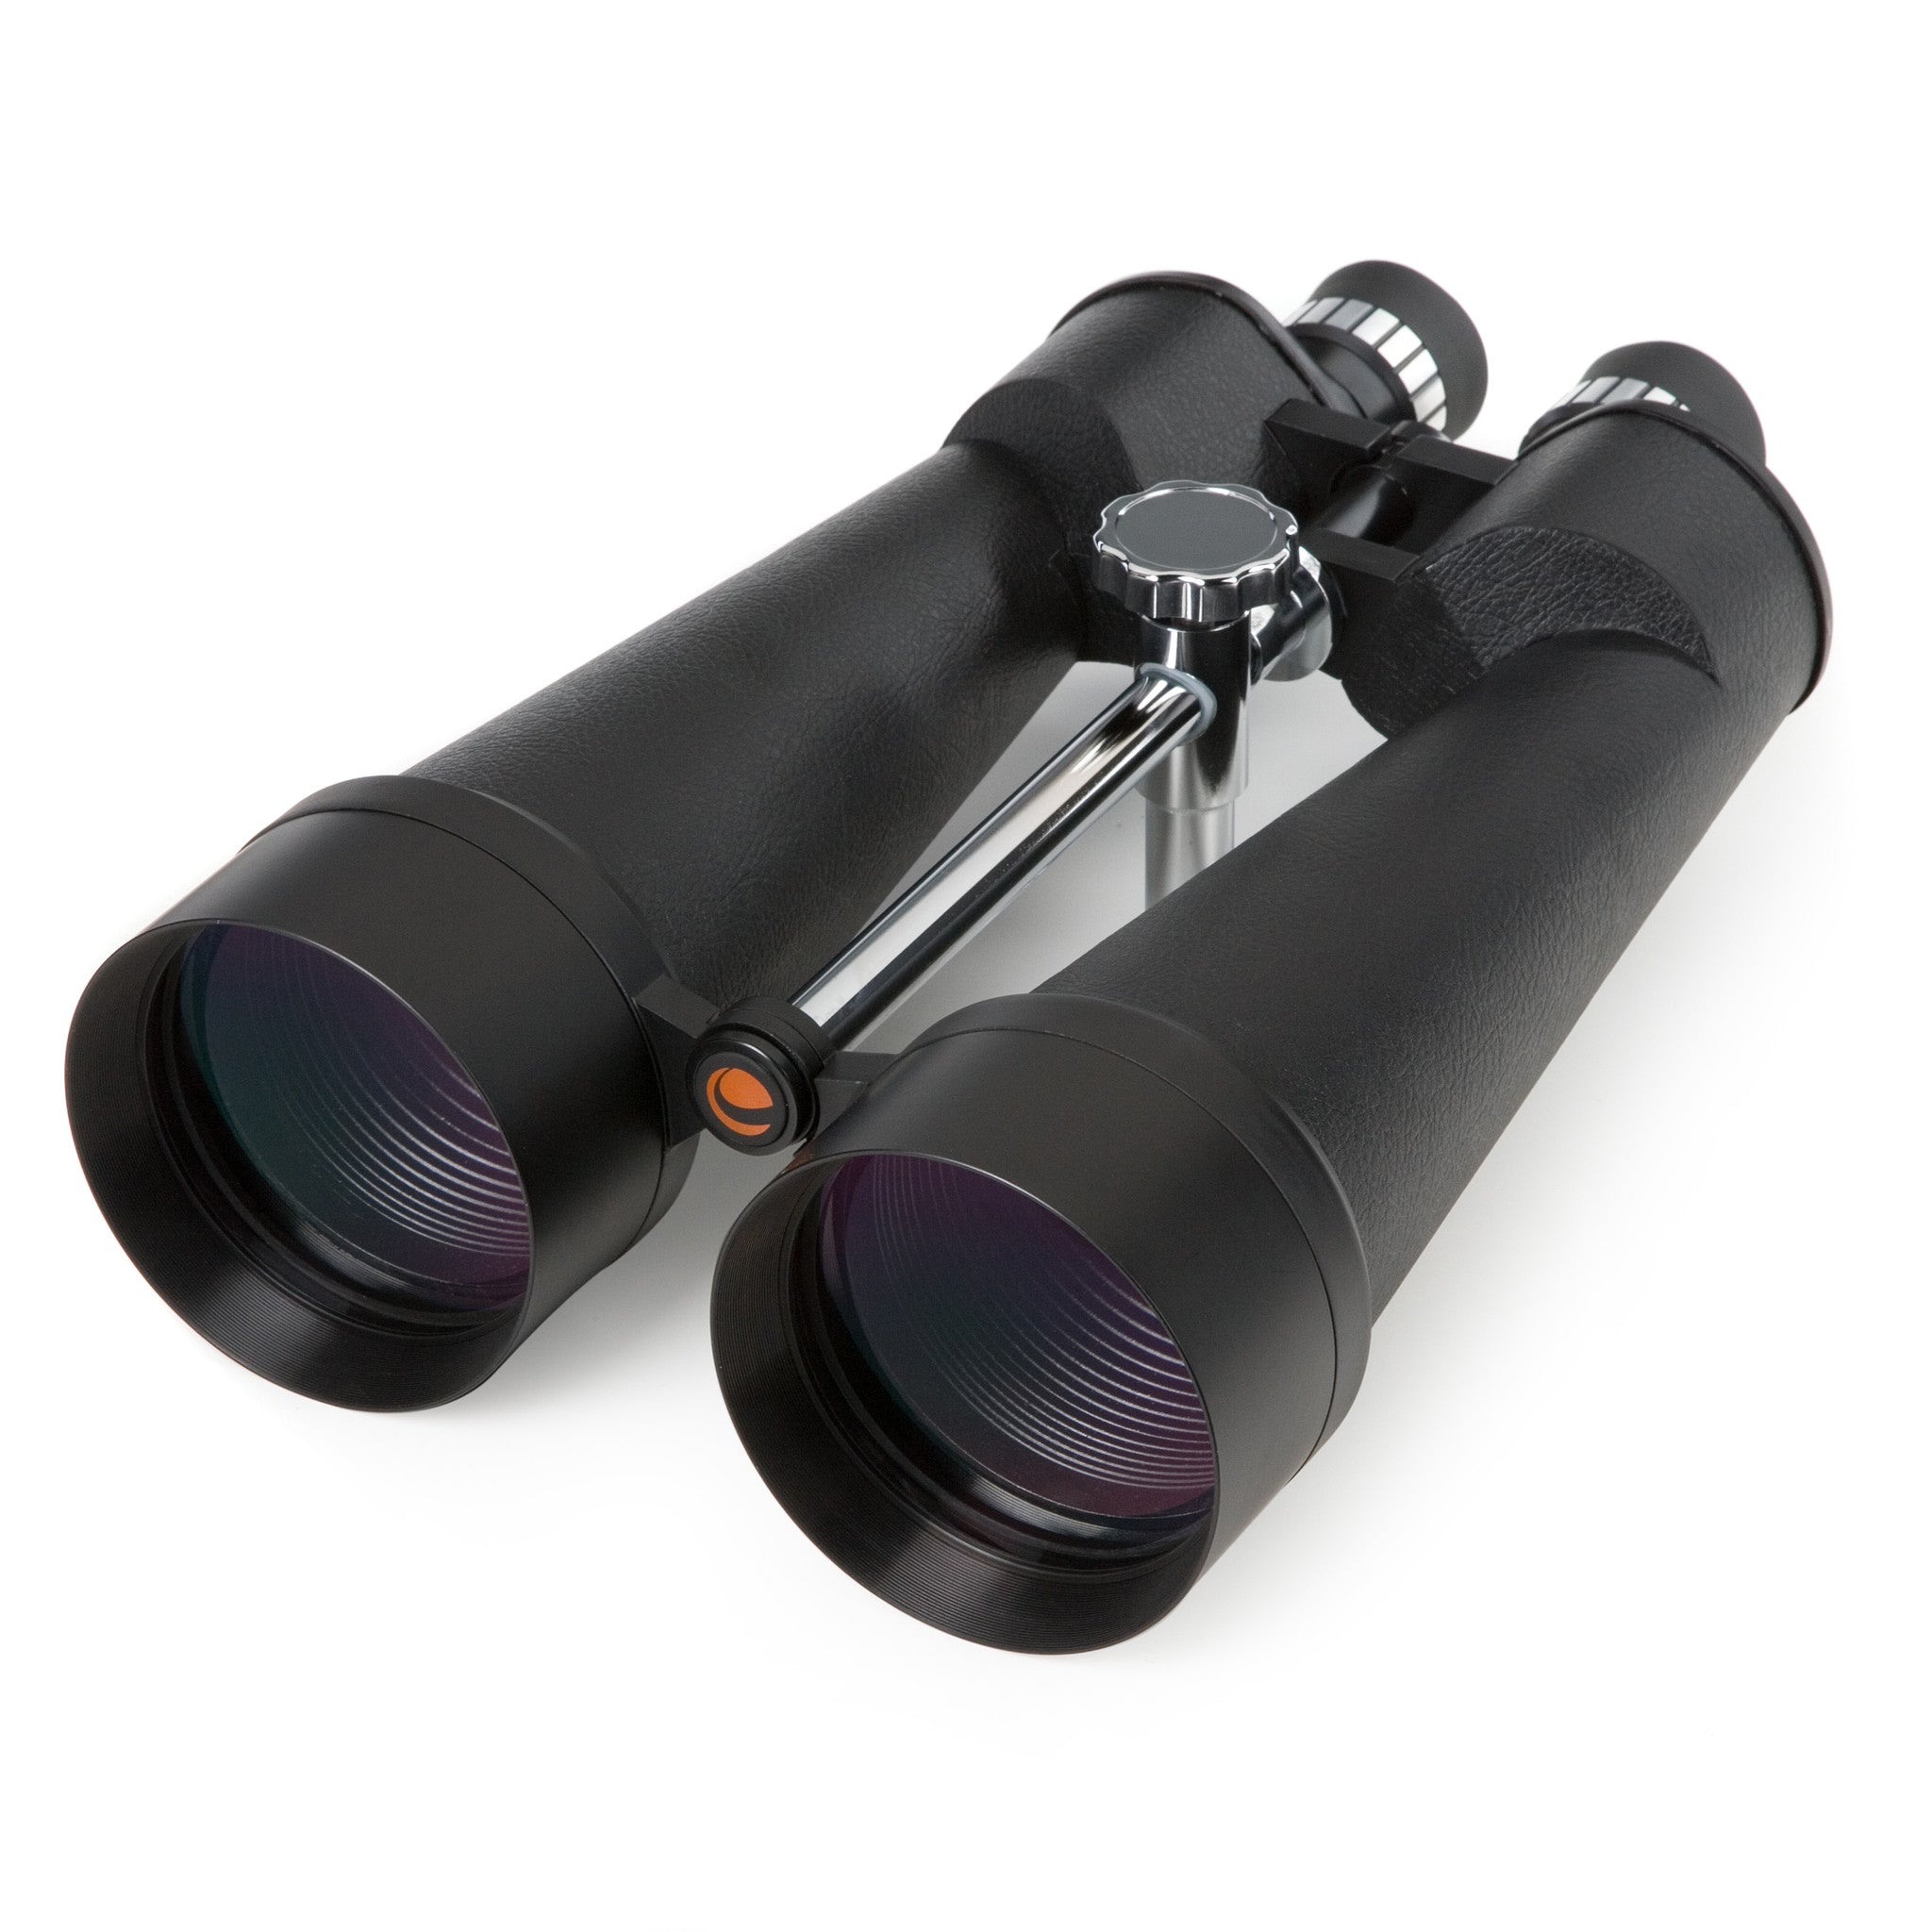 giant binoculars for sale